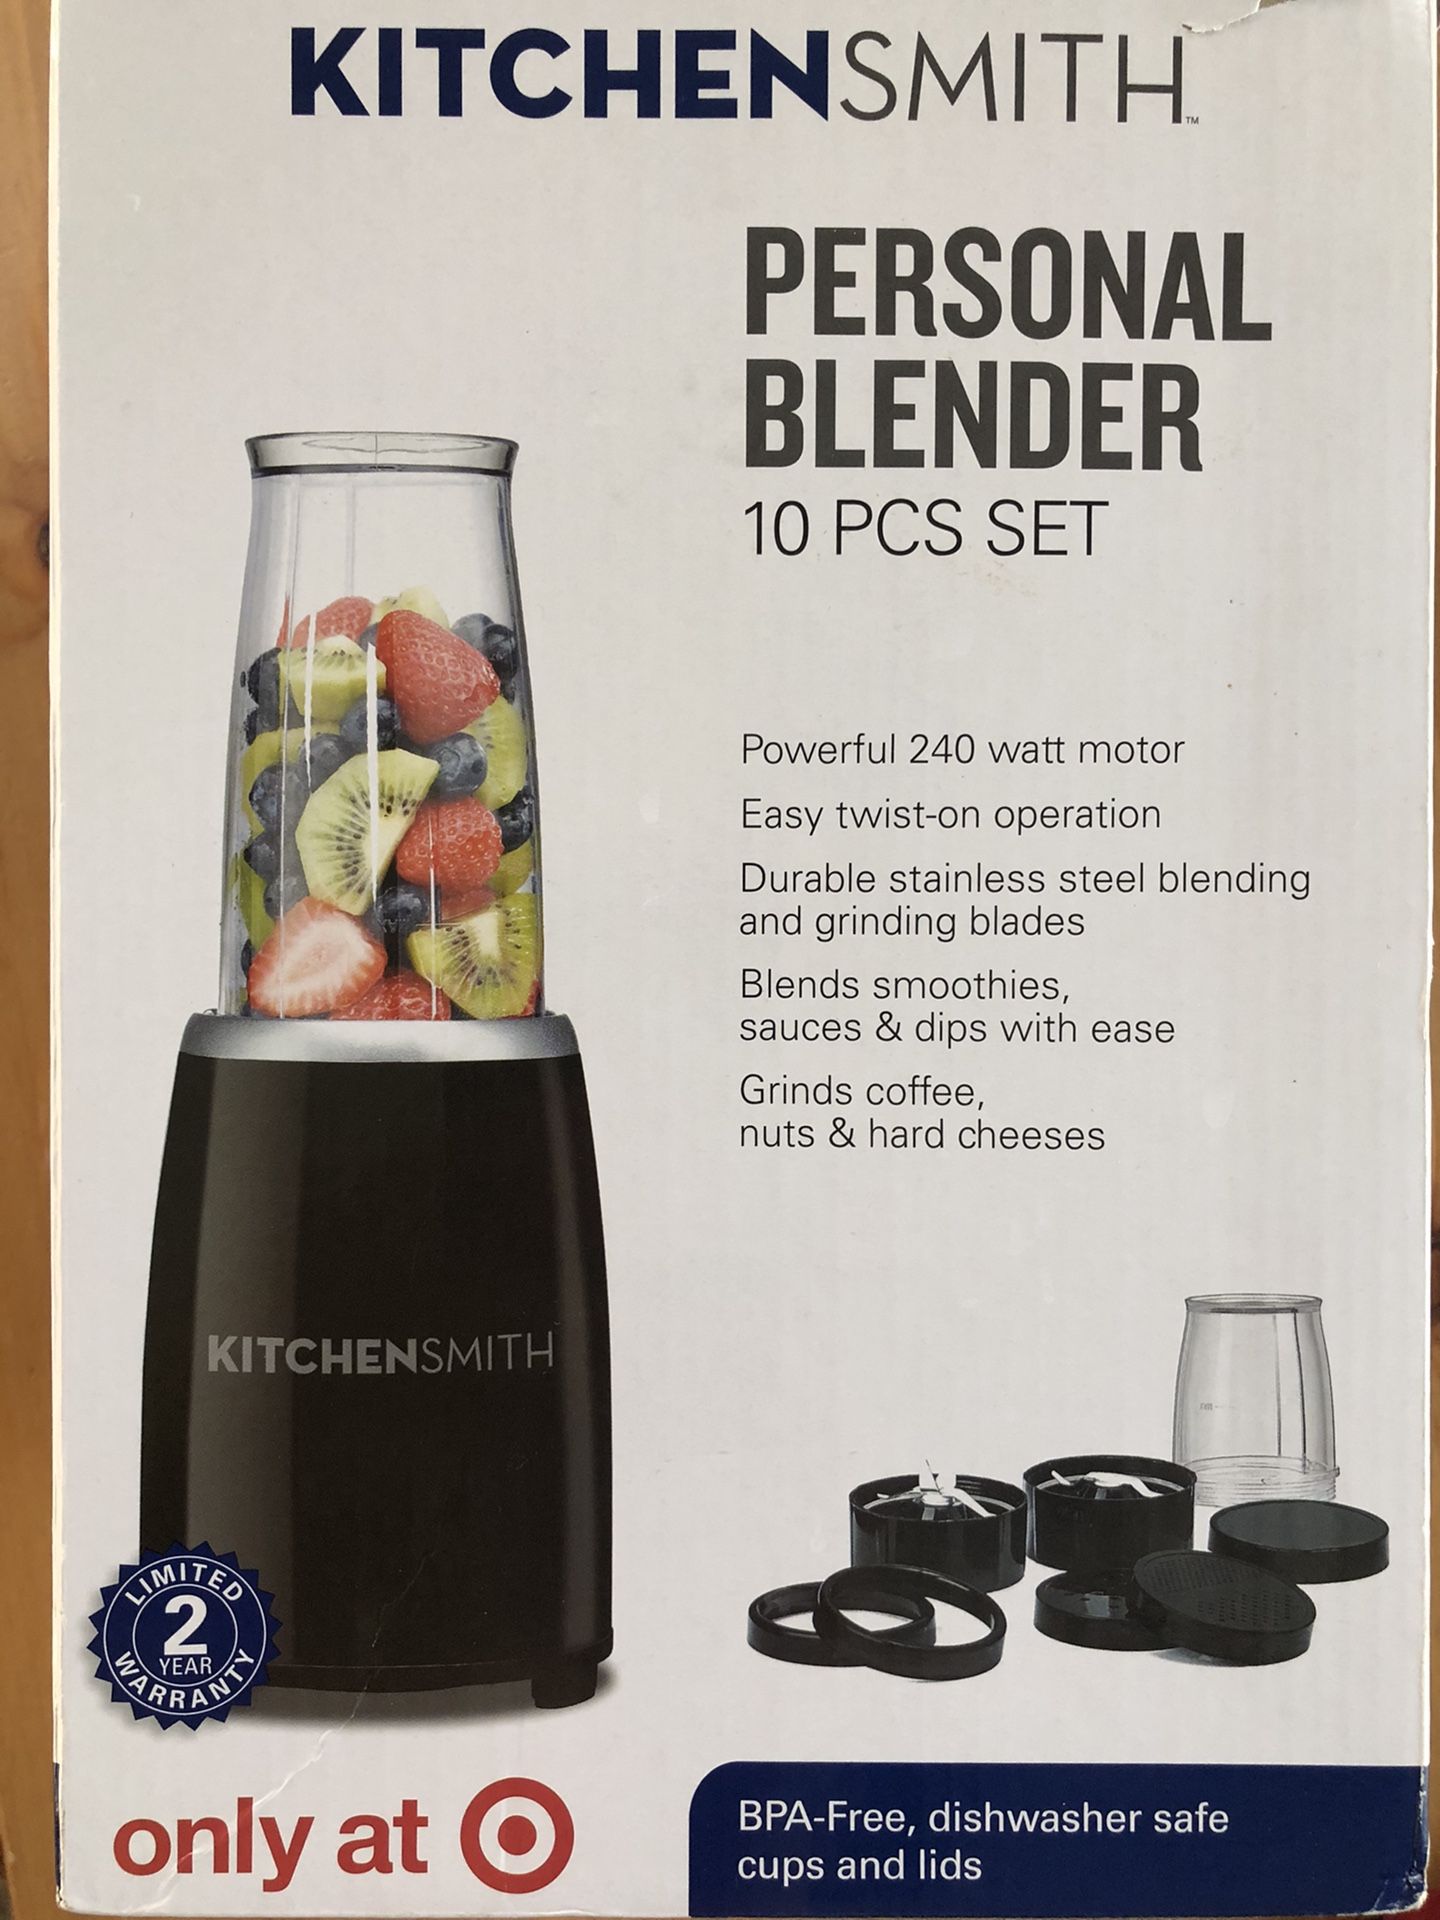 Blender Kitchen Smith BPA Free and dishwasher safe